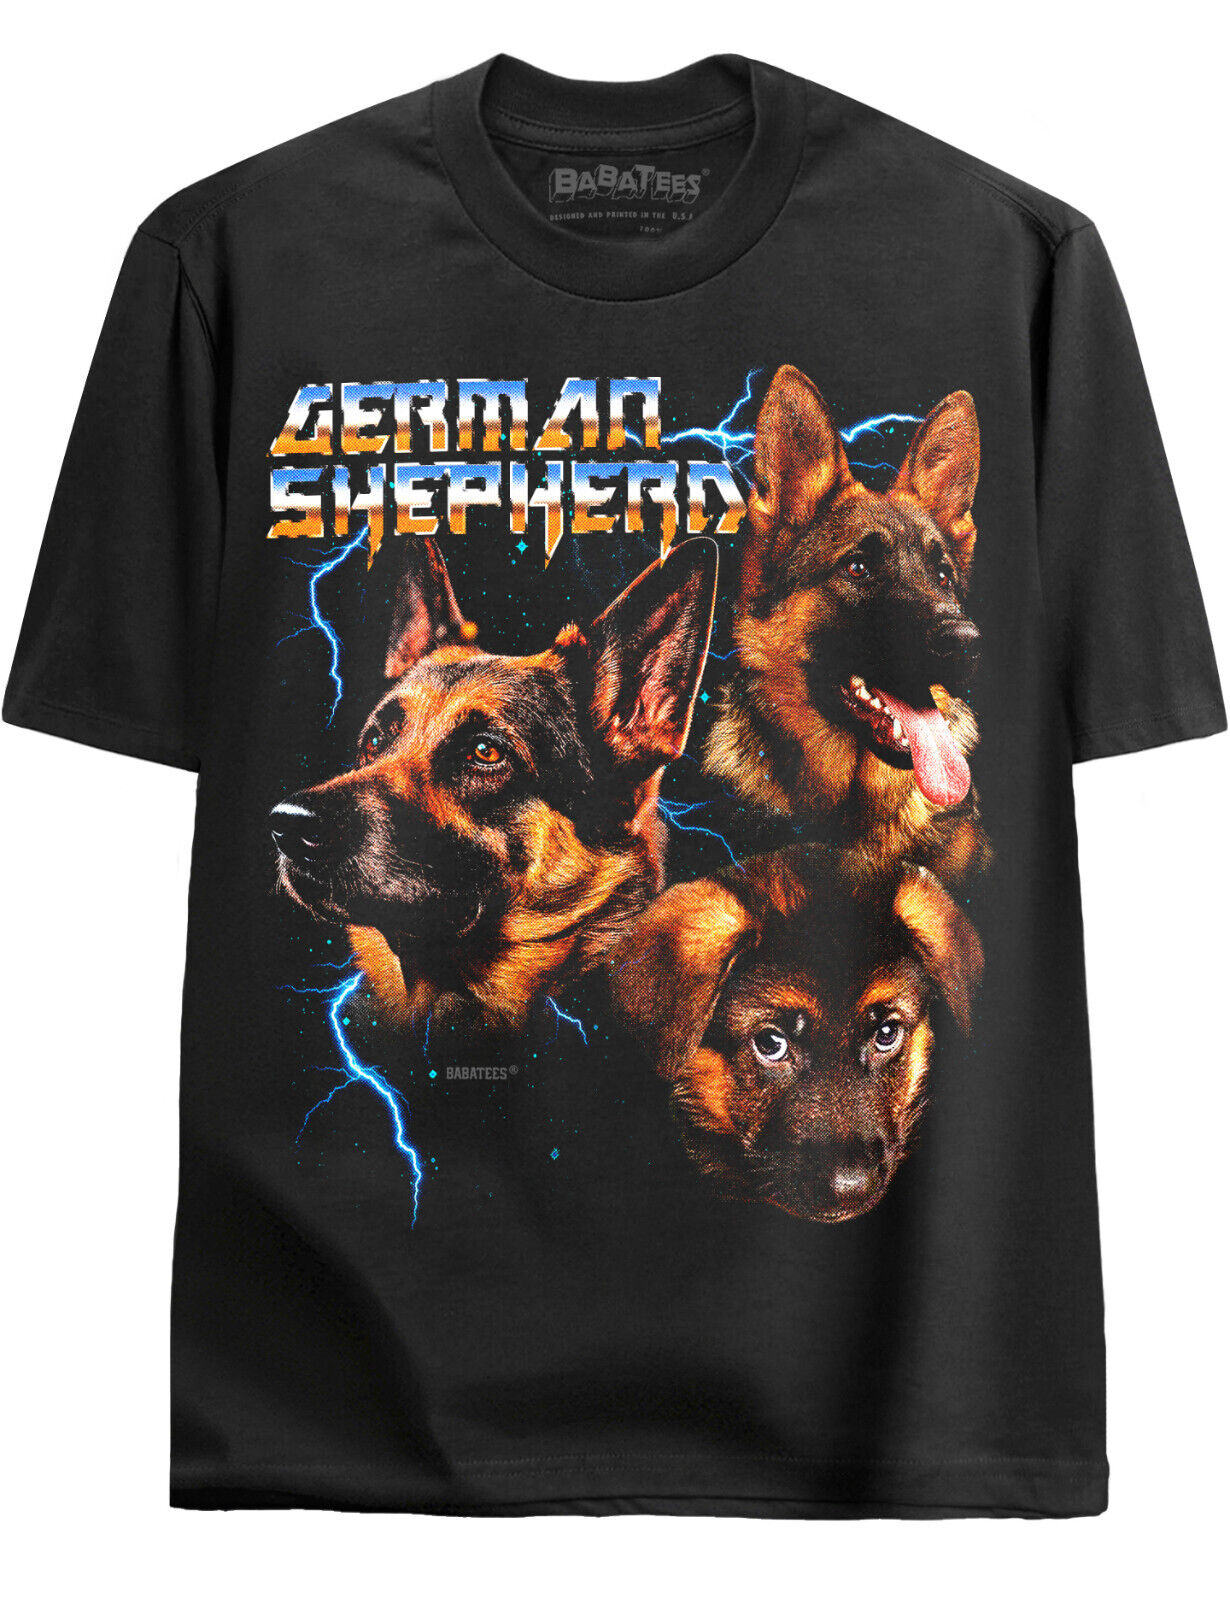 German Shepherd 80s 90s Bootleg Tee Heavy Metal Tshirt for Men & Women Dog Owner